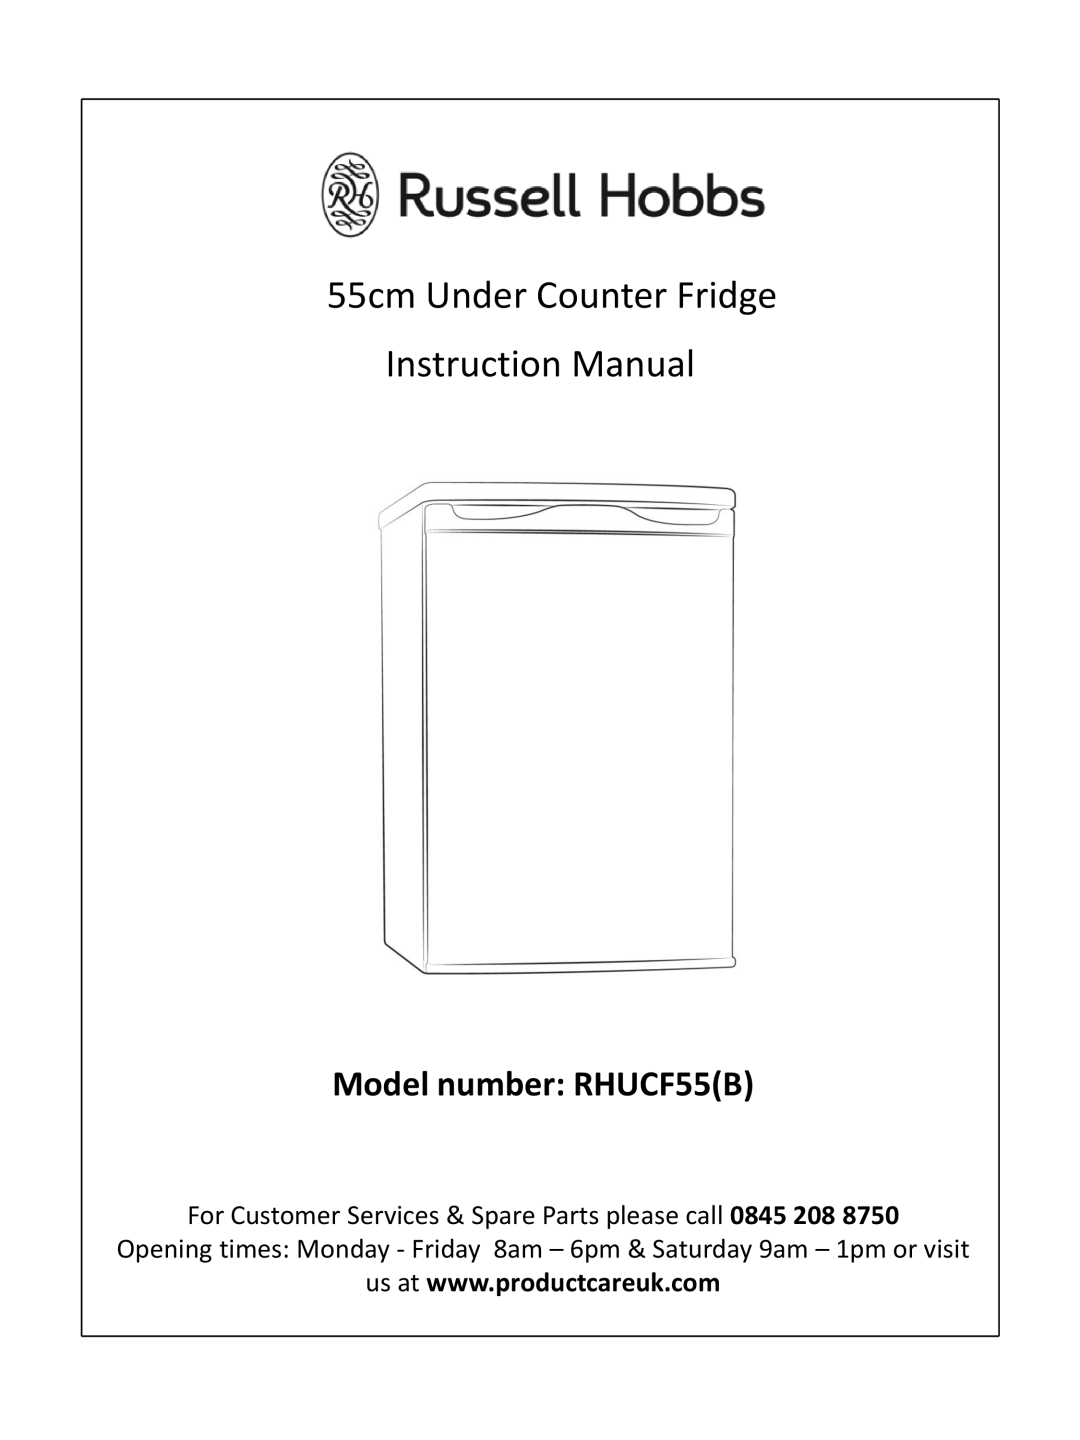 Russell Hobbs RHUCF55(B) instruction manual Model number RHUCF55B 